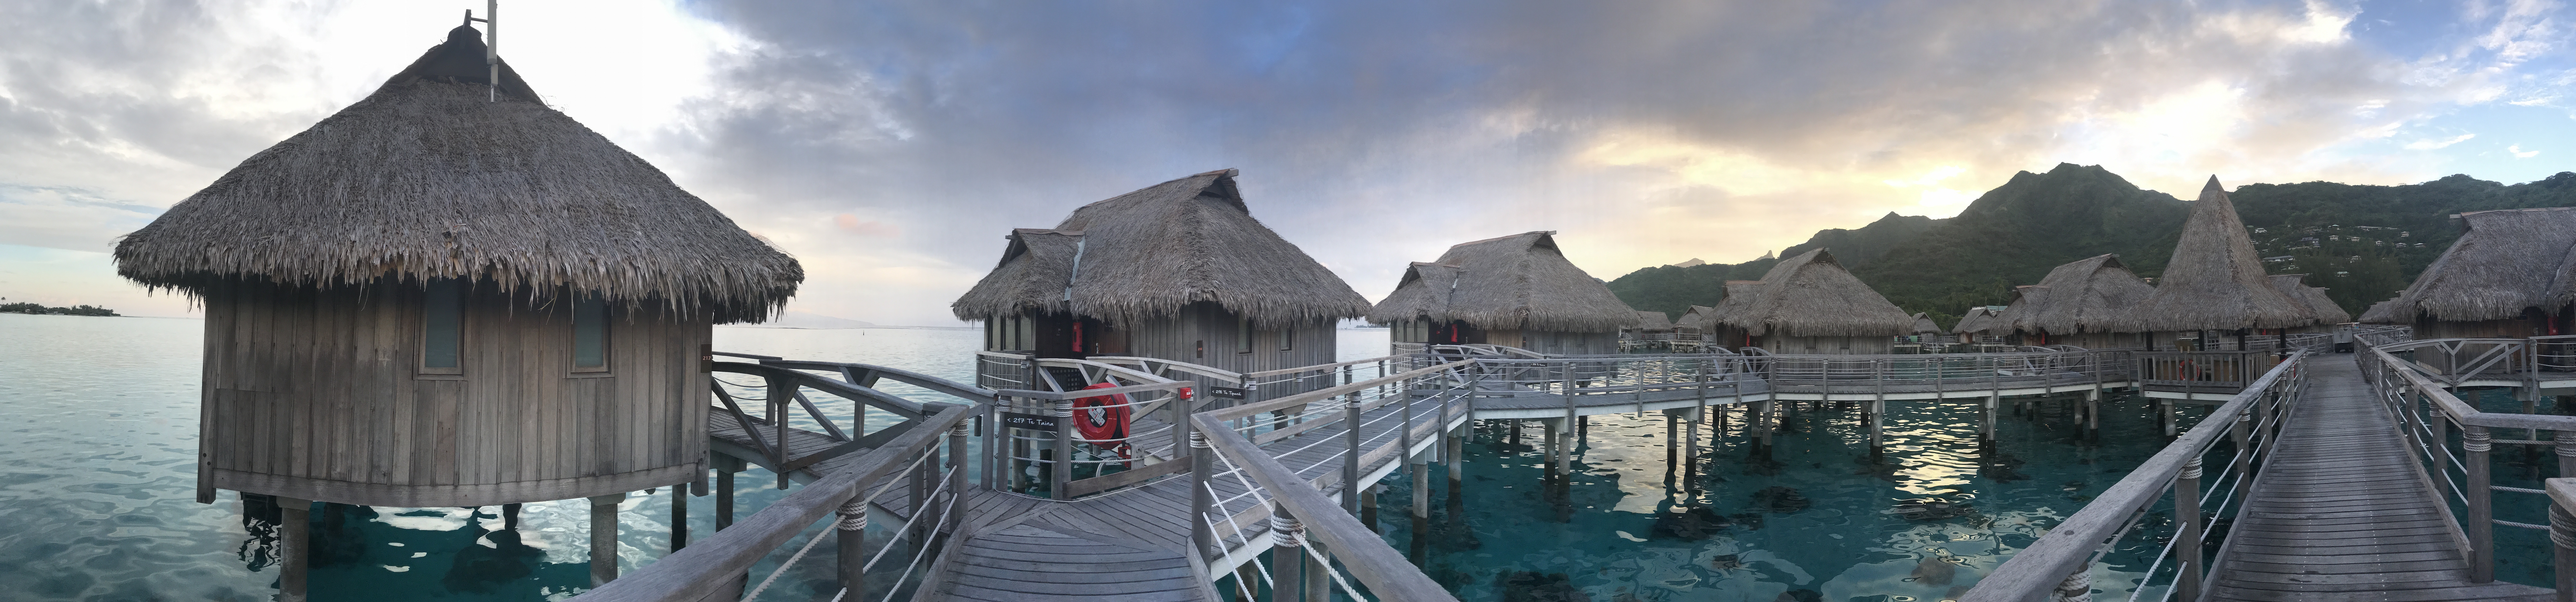 3 Days In Moorea, Tahiti Trip 2018 - Tahiti Honeymoon - Tahiti Itinerary - French Polynesia - Things To Do In Tahiti - Communikait by Kait Hanson